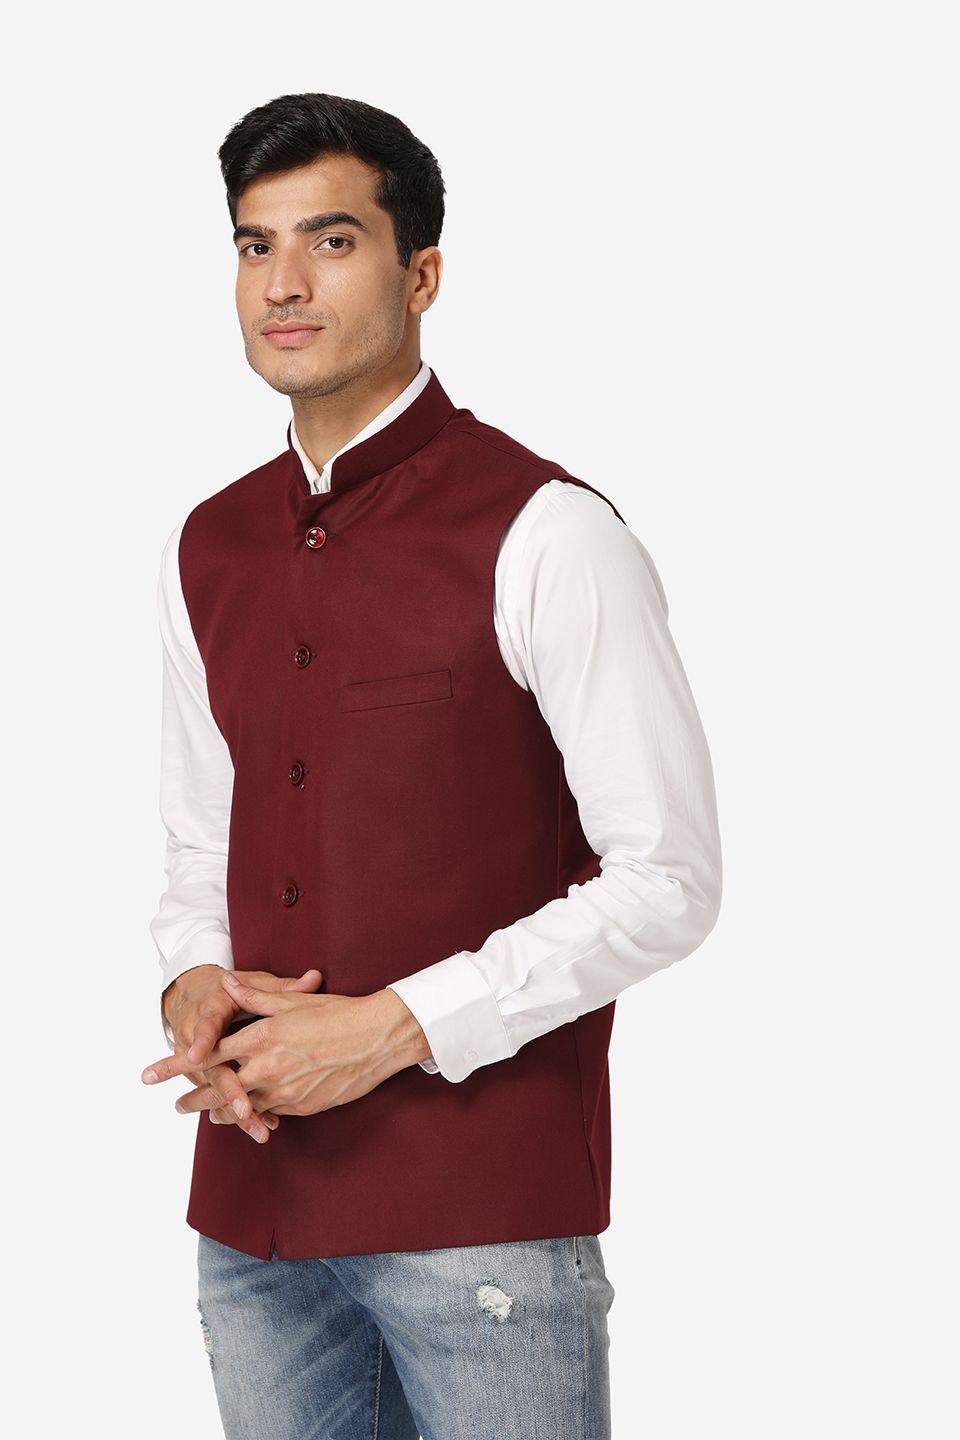 WINTAGE Men's Poly Cotton Festive and Casual Nehru Jacket Vest Waistcoat : Purple